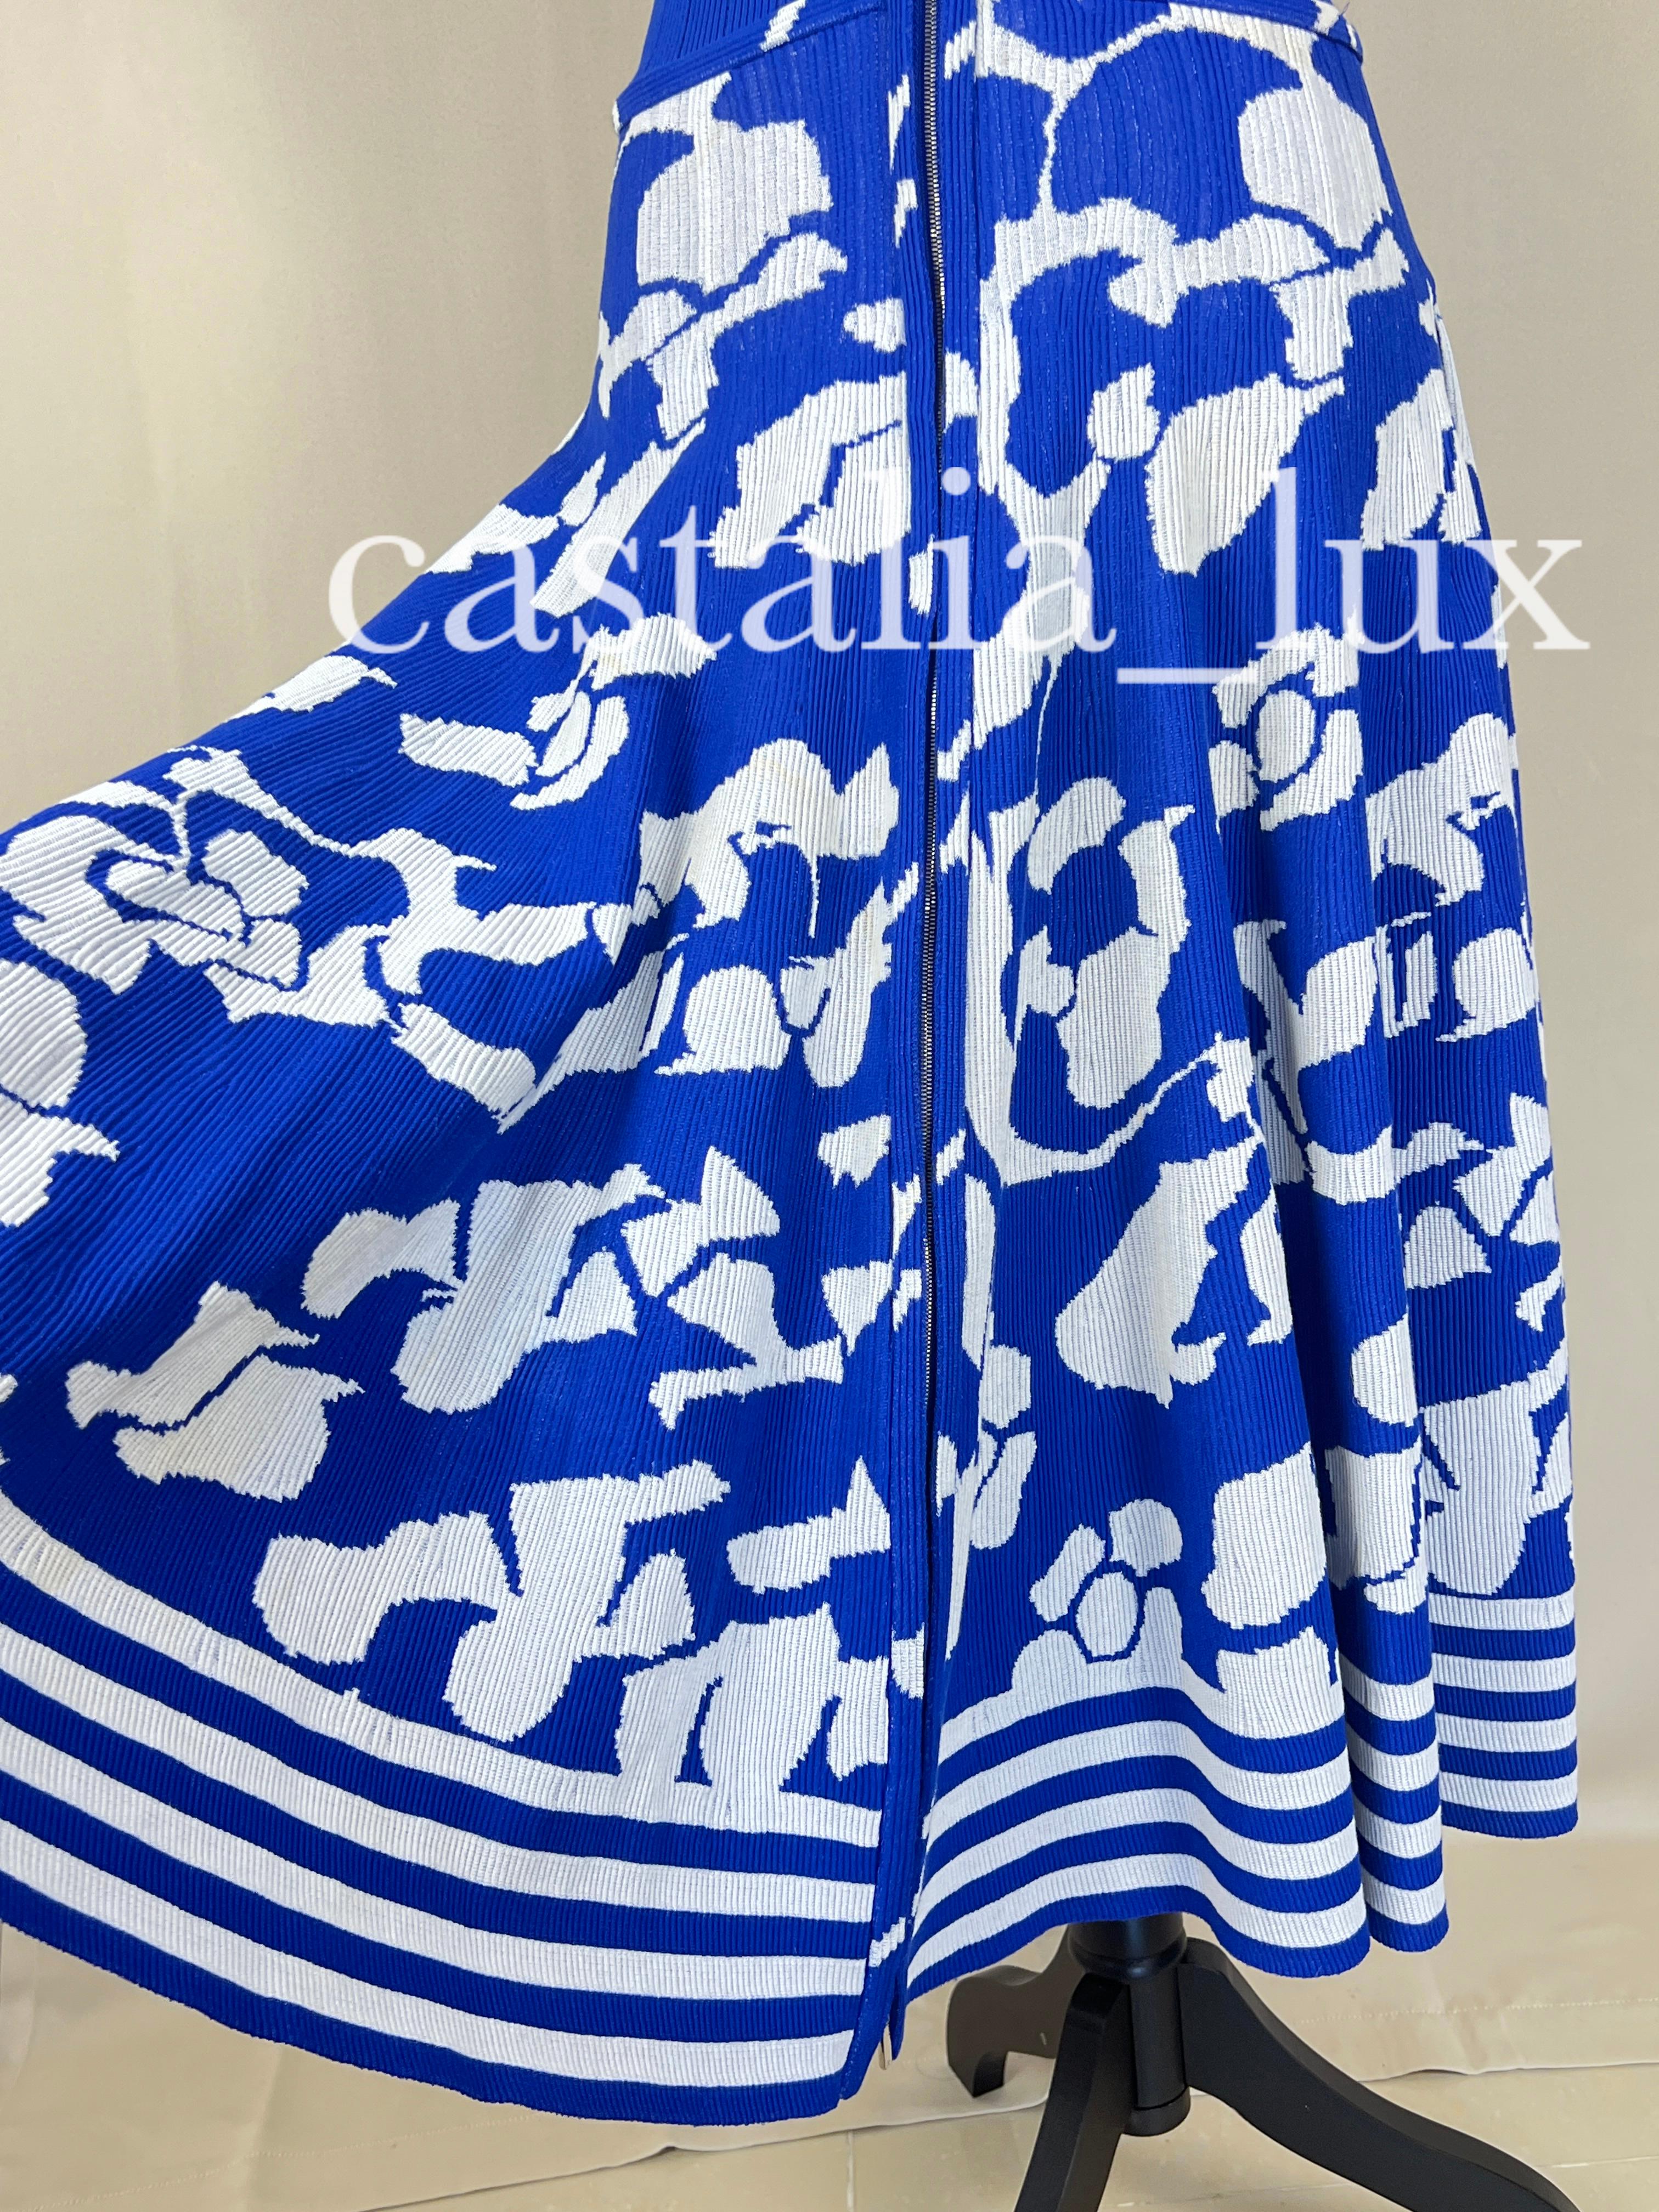 Chanel Iconic Jessica Biel Style Maxi Dress For Sale 6